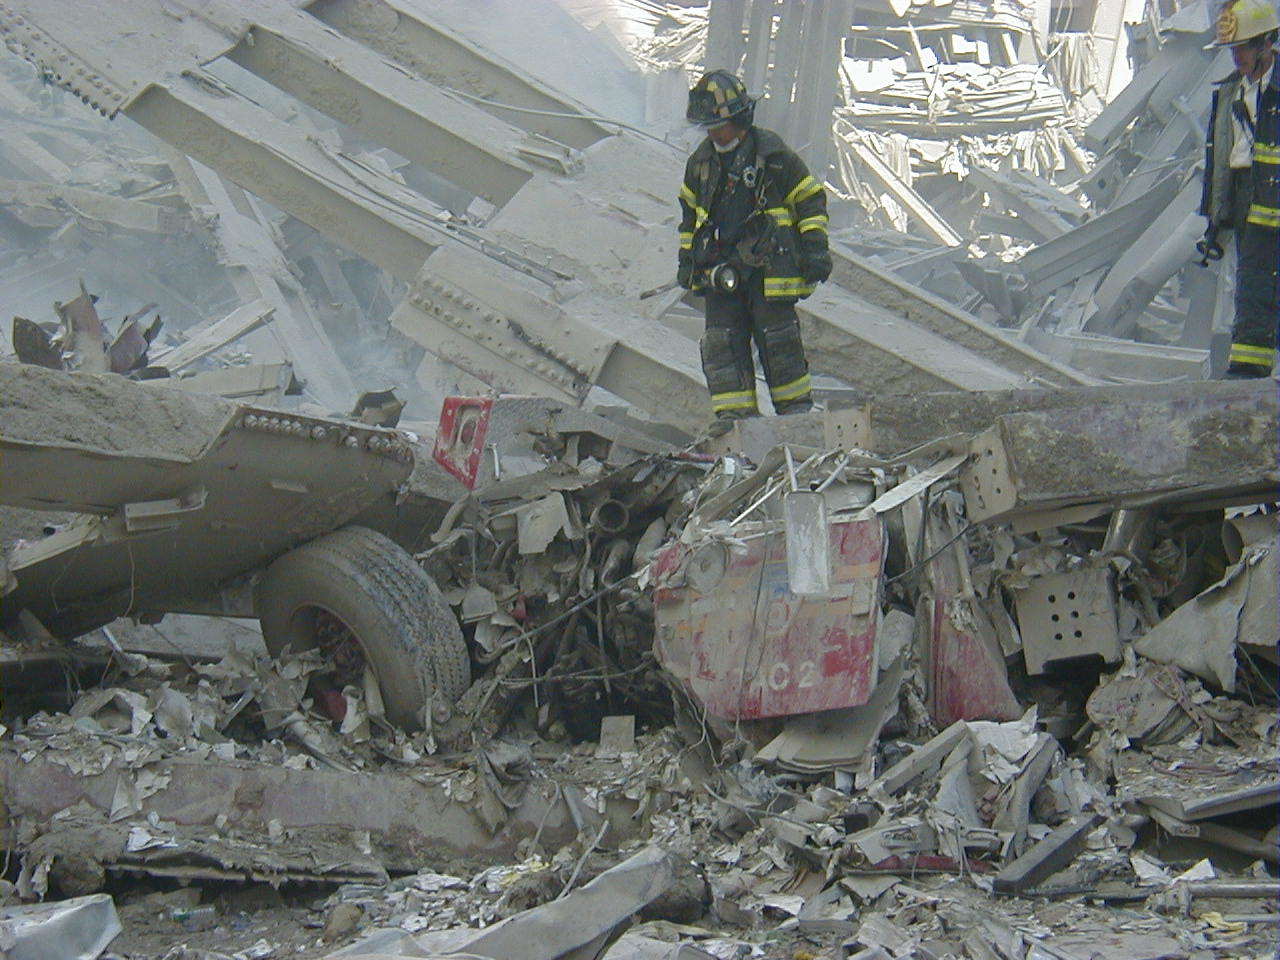 Robert Collis captured this photo on 9/11. 